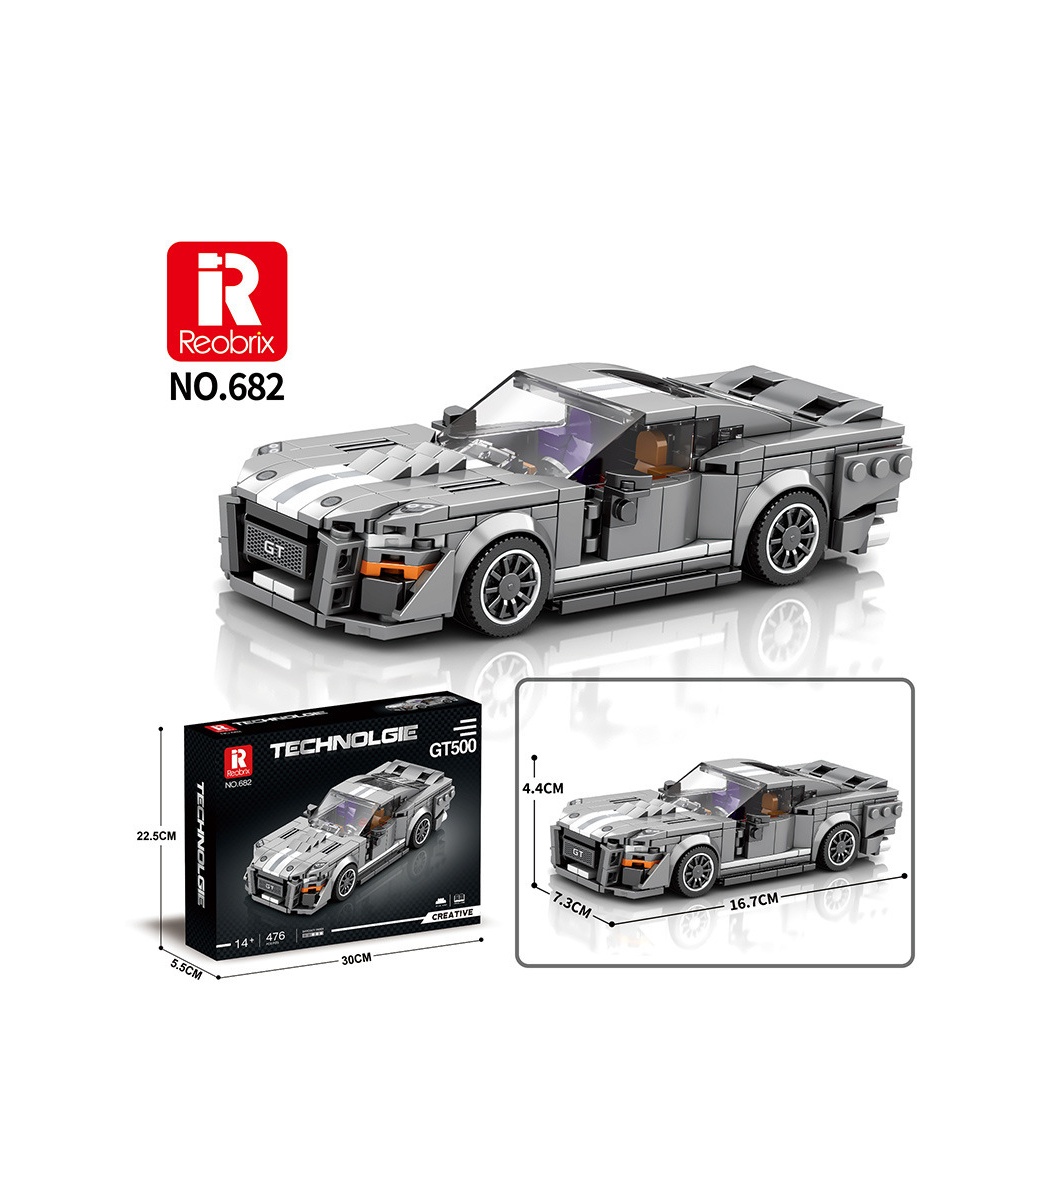 Reobrix 682 Shelby GT500 Sports Car Building Blocks Toy Set